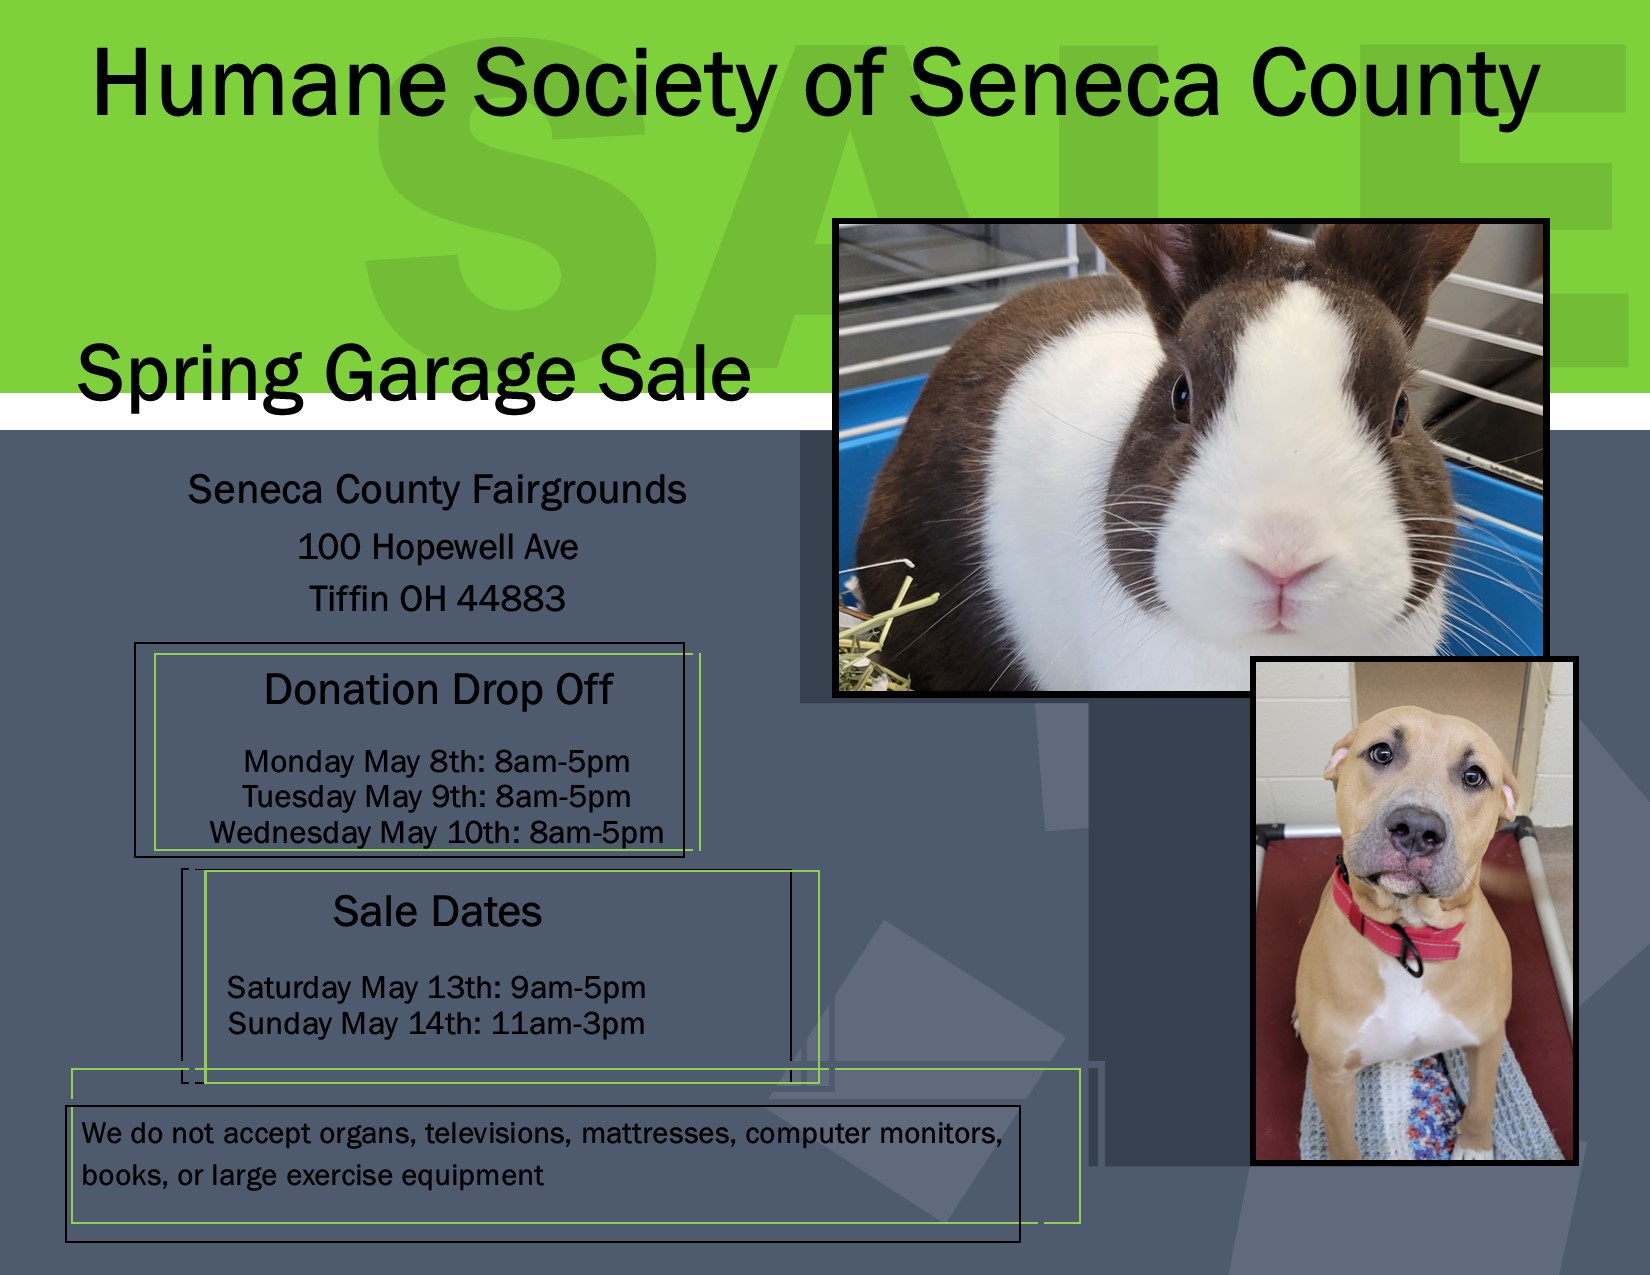 Humane Society of Seneca County Spring Garage Sale